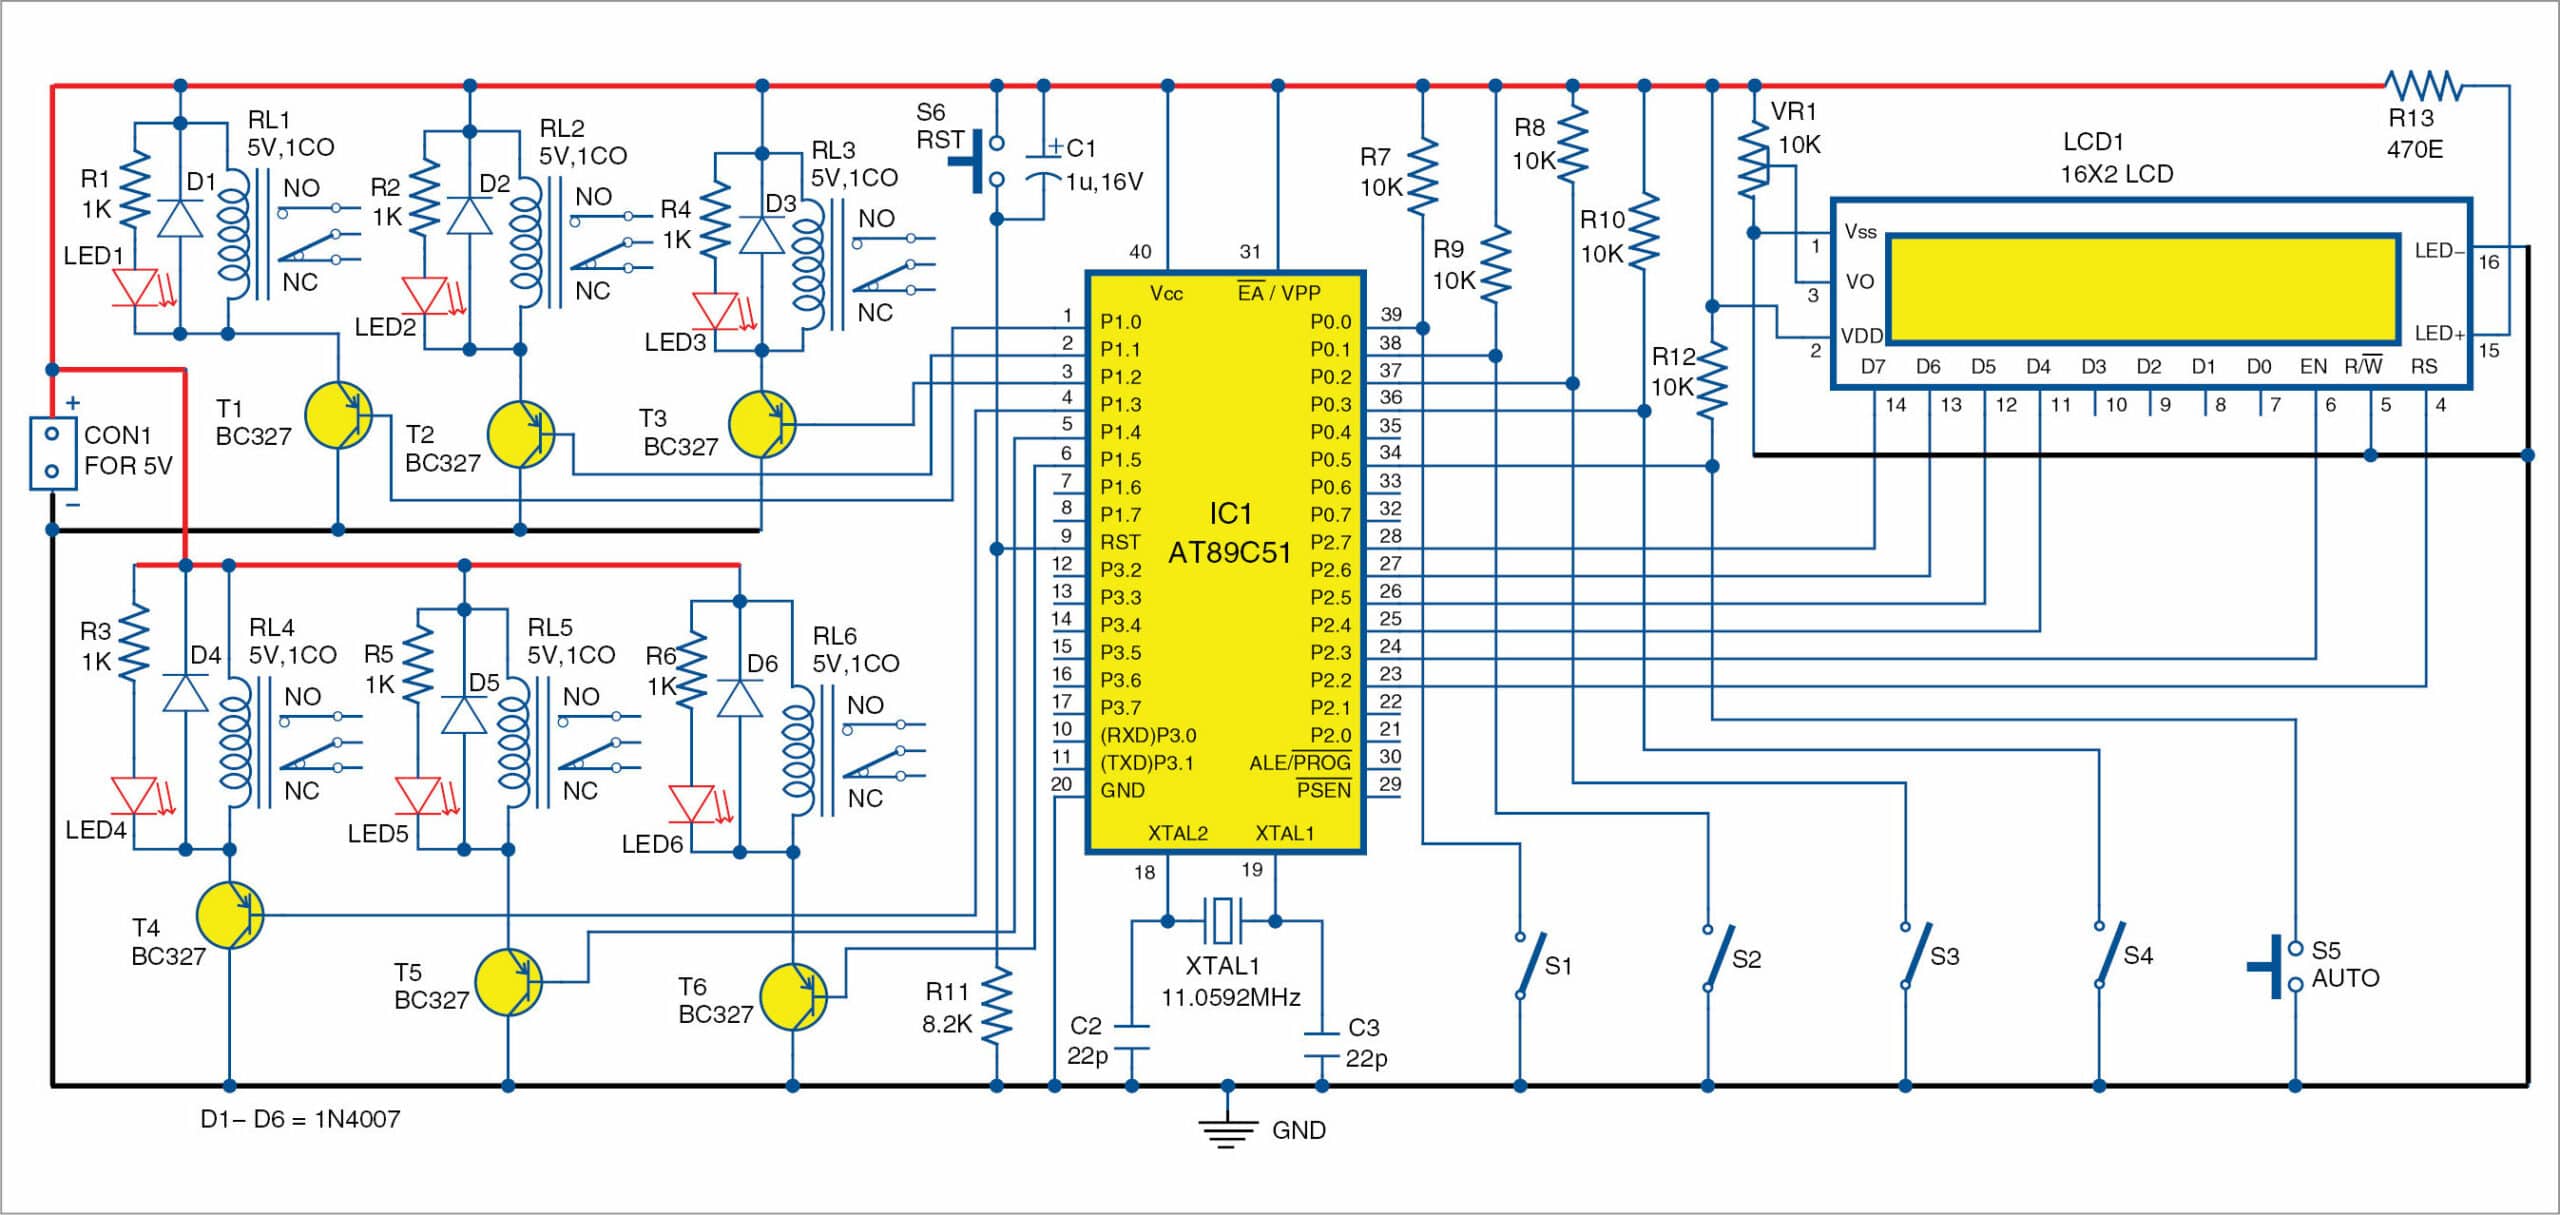 Thin-Film Deposition Controller Using Microcontroller